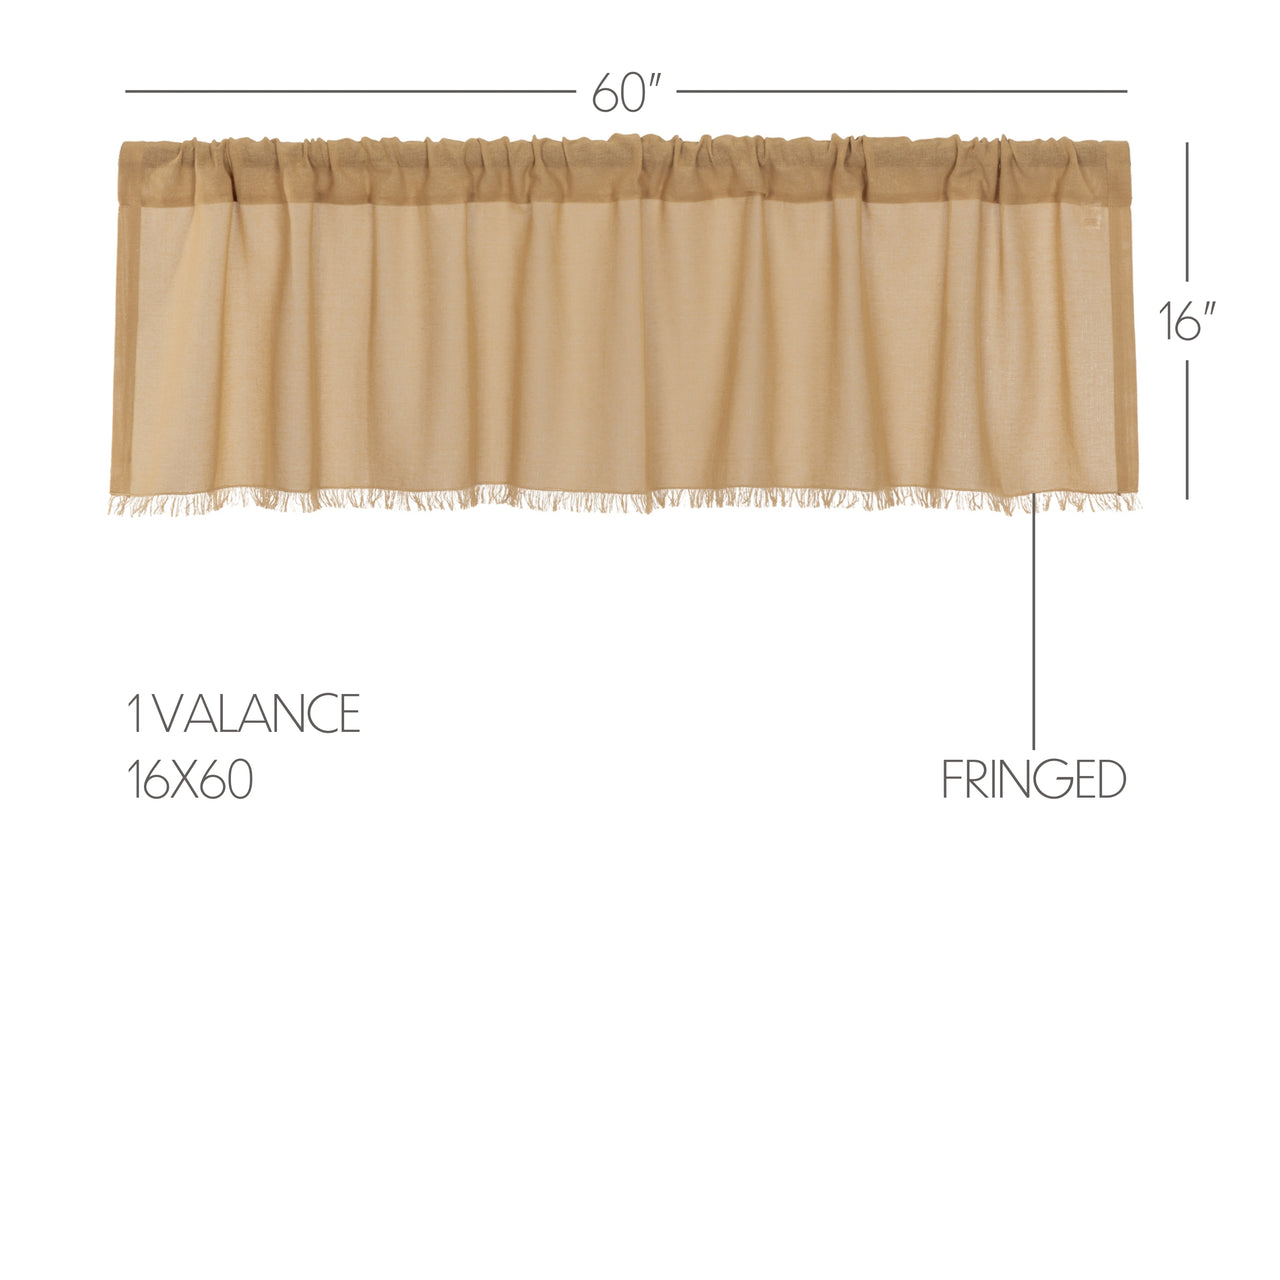 Tobacco Cloth Khaki Valance Fringed Curtain 16x60 VHC Brands